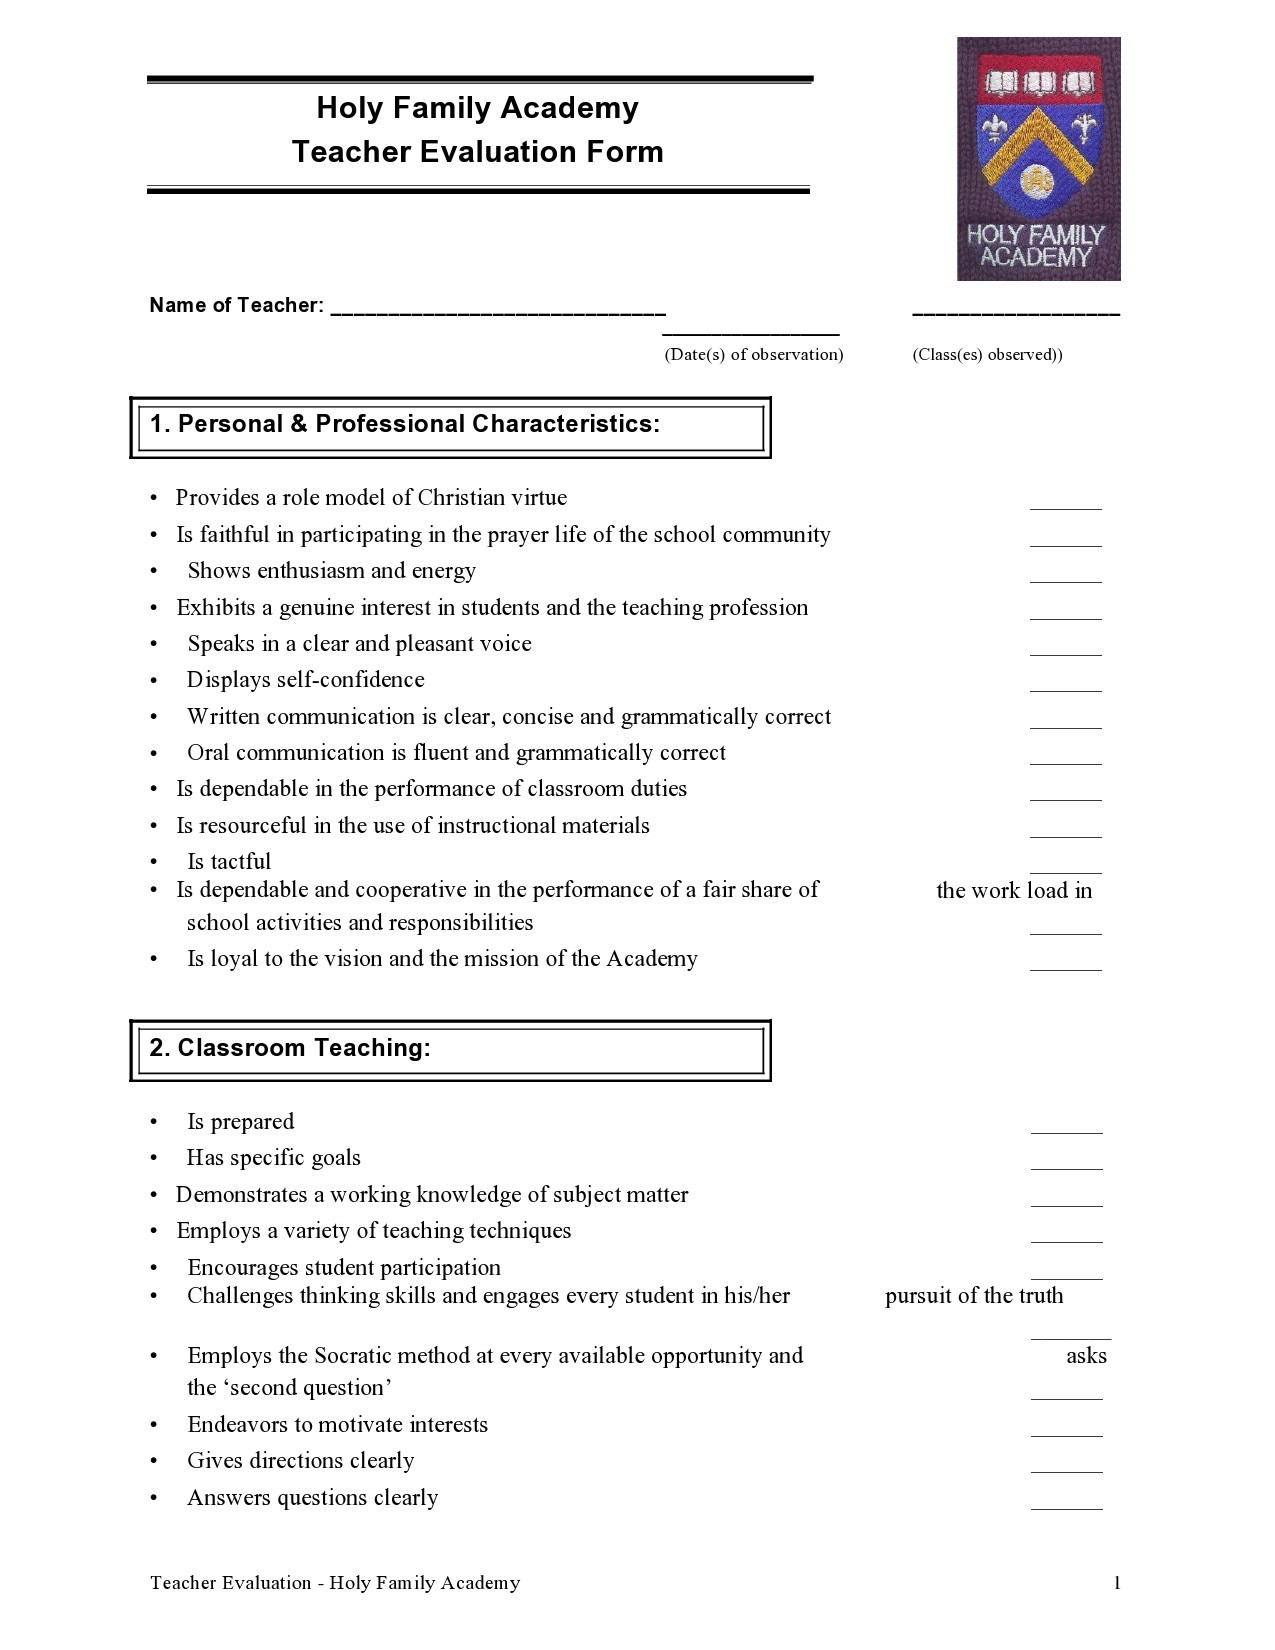 Free teacher evaluation form 23